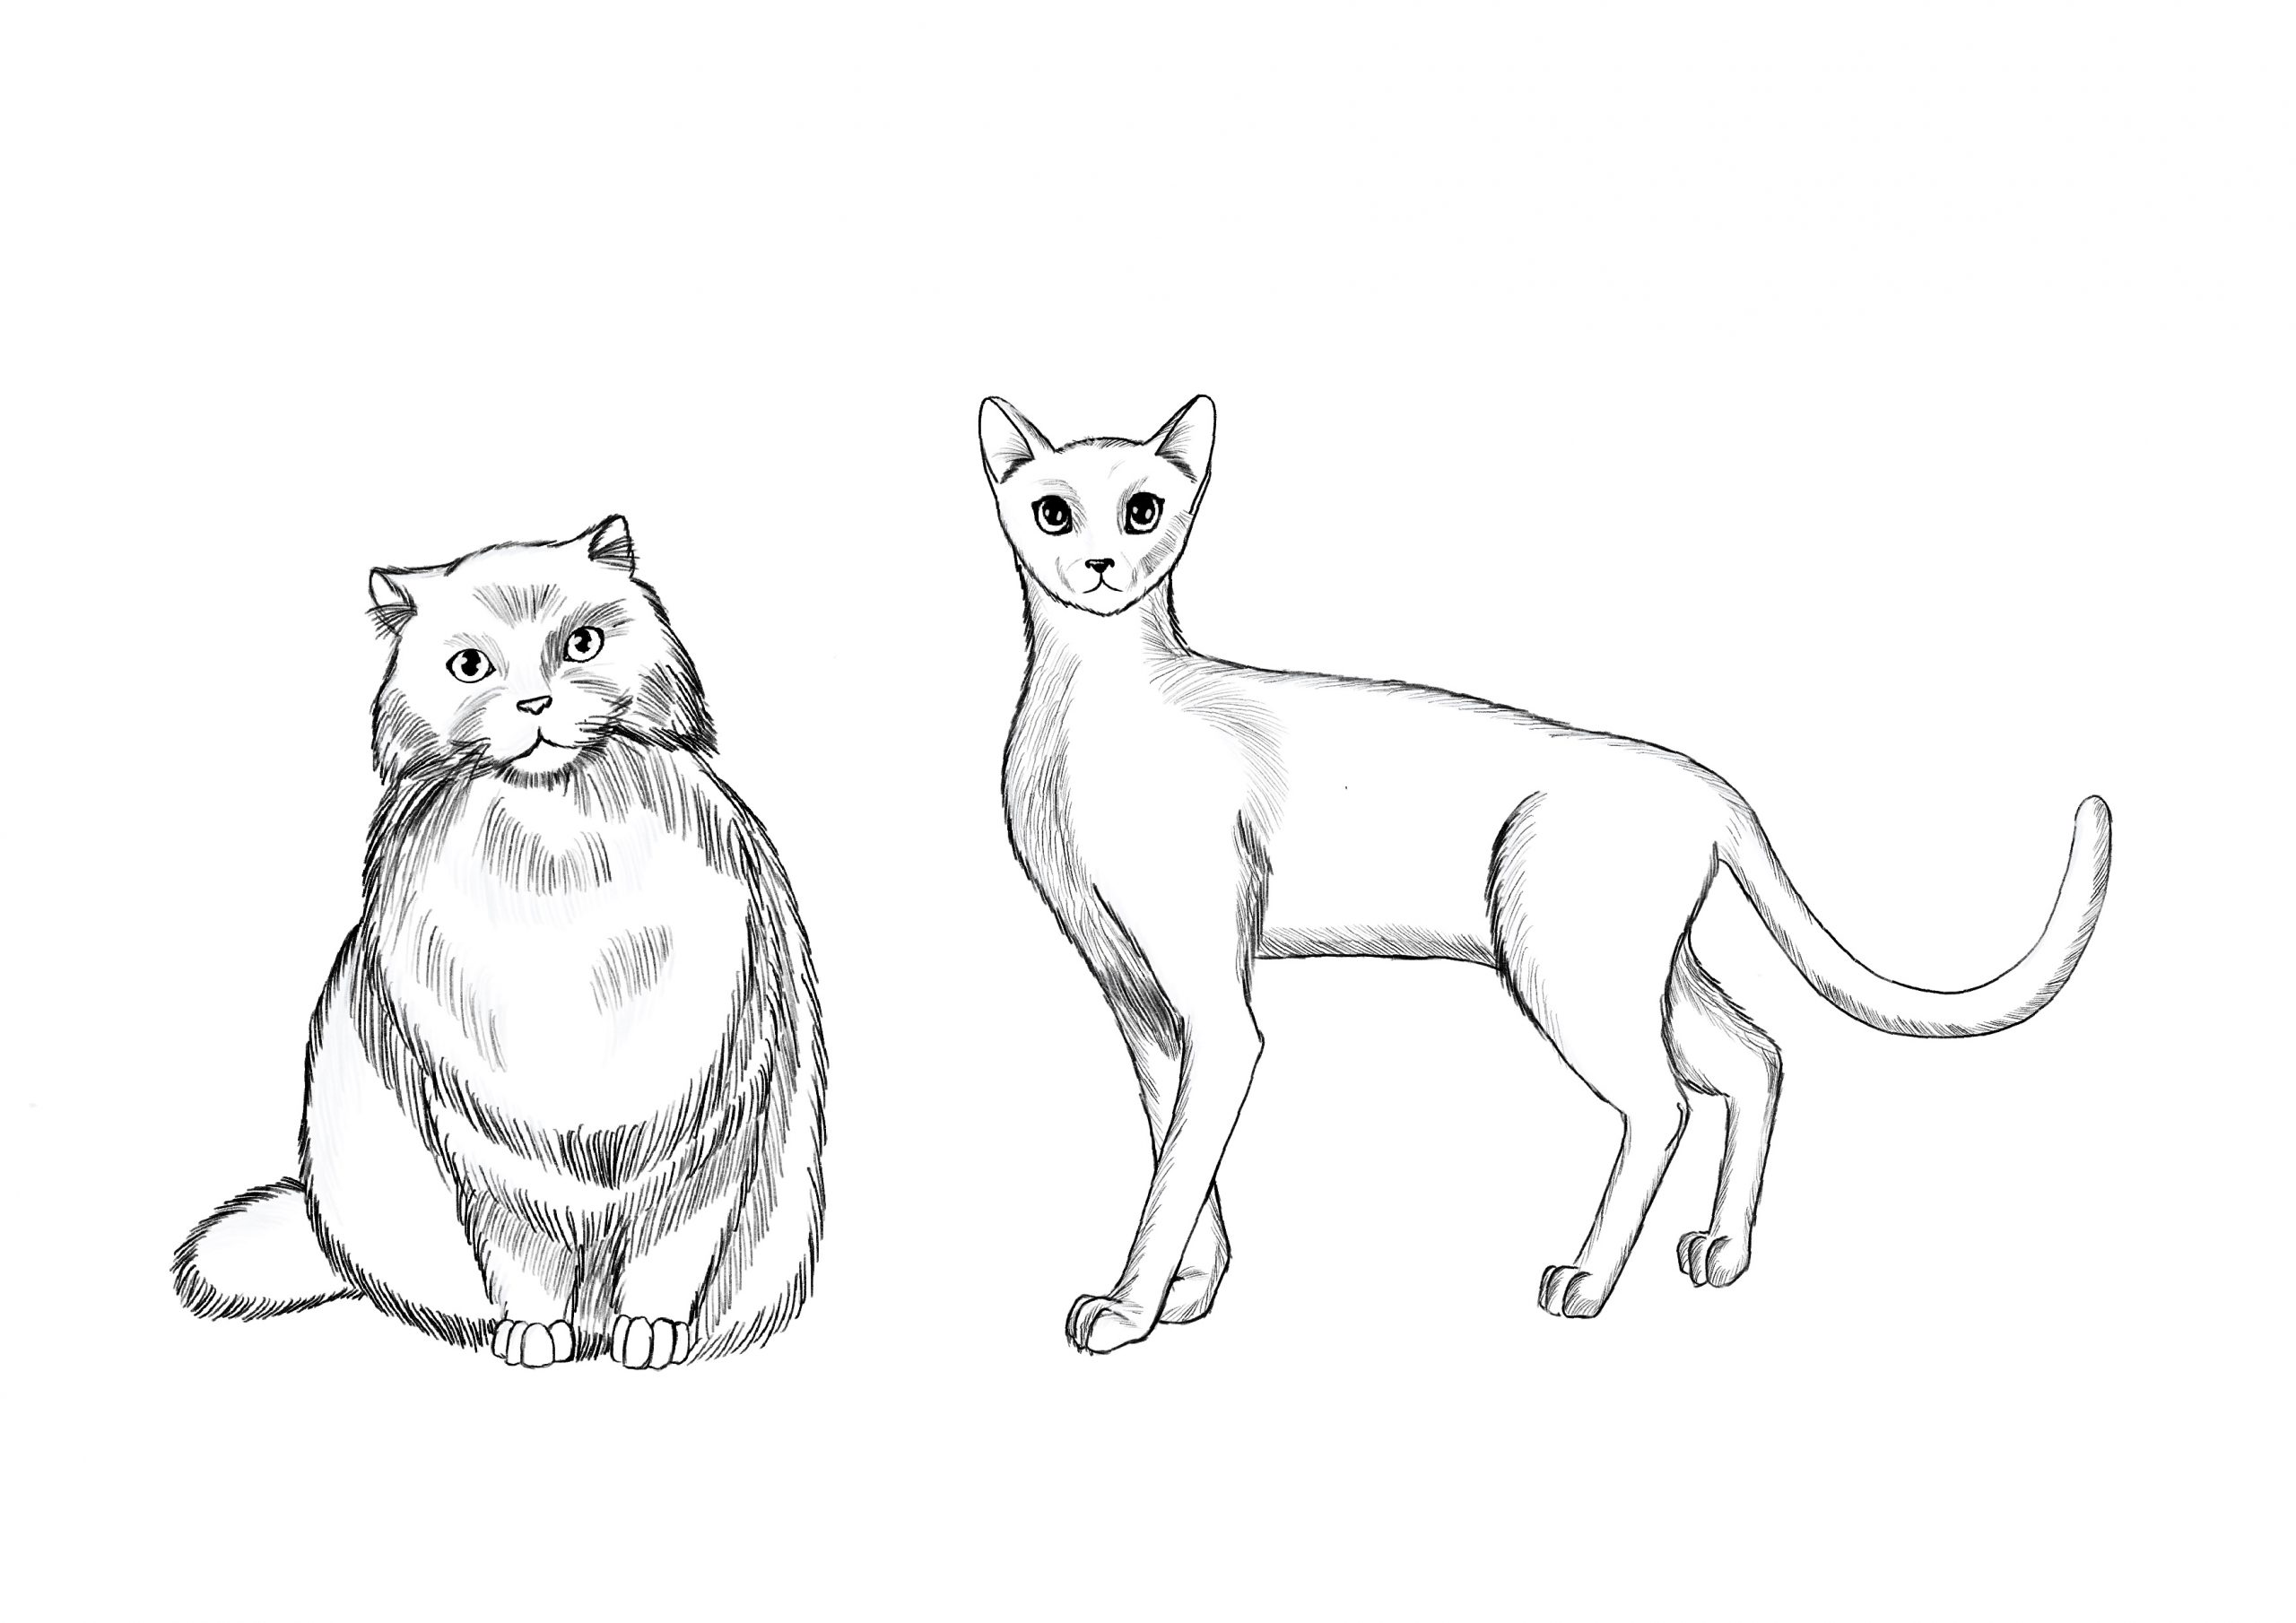 Cats and animal sketches - ElissDigitalArt